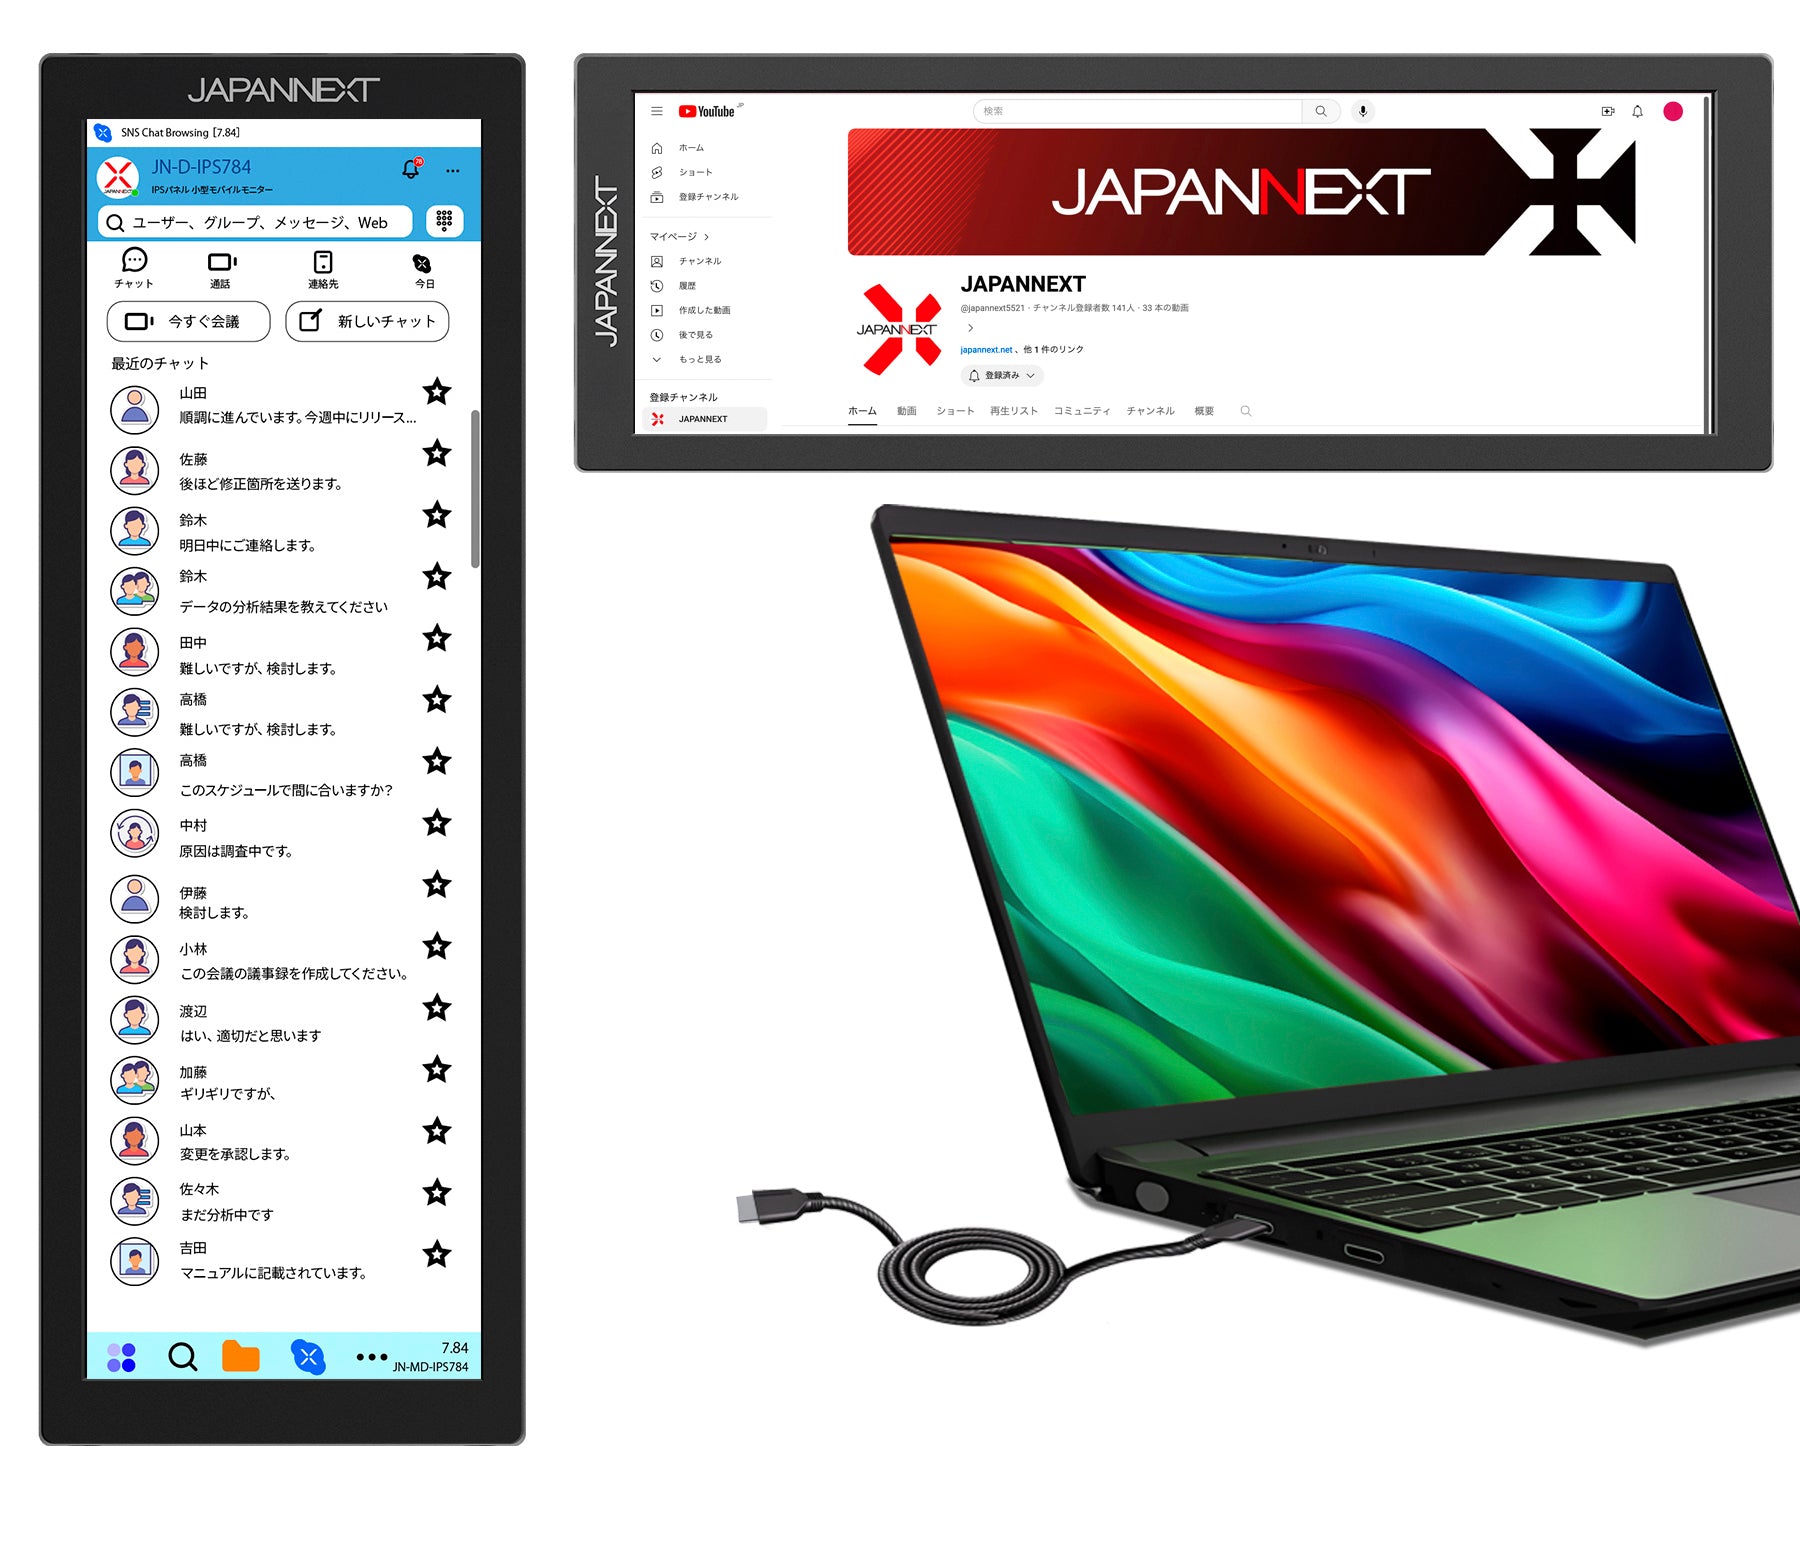 JAPANNEXT 7.8インチIPSパネル 400x1280解像度 小型縦型モバイル